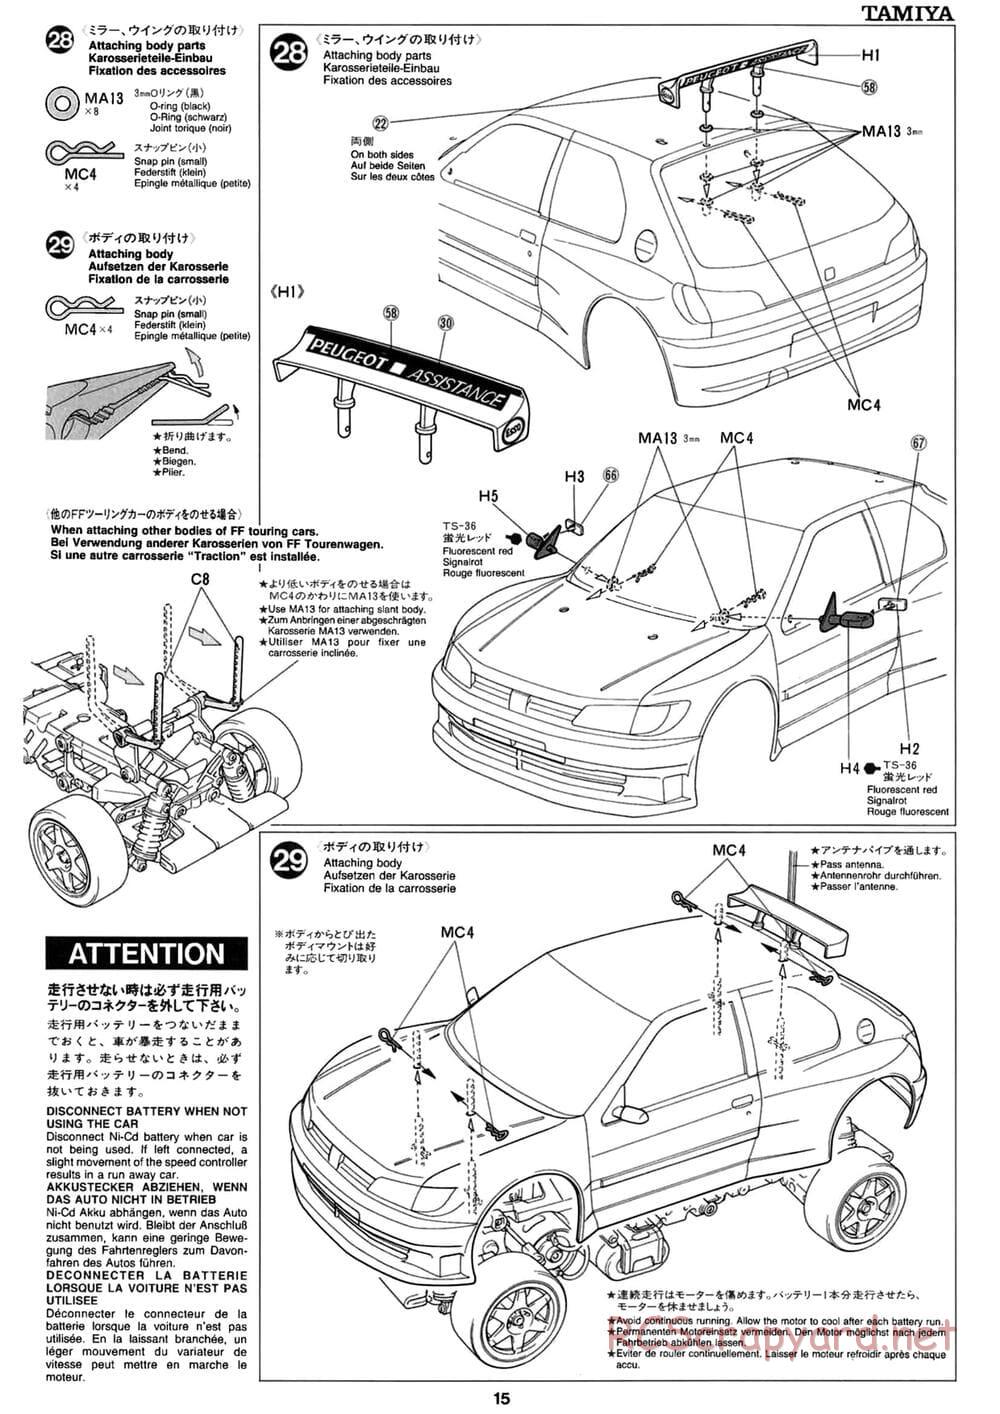 Tamiya - Peugeot 306 Maxi WRC - FF-02 Chassis - Manual - Page 15